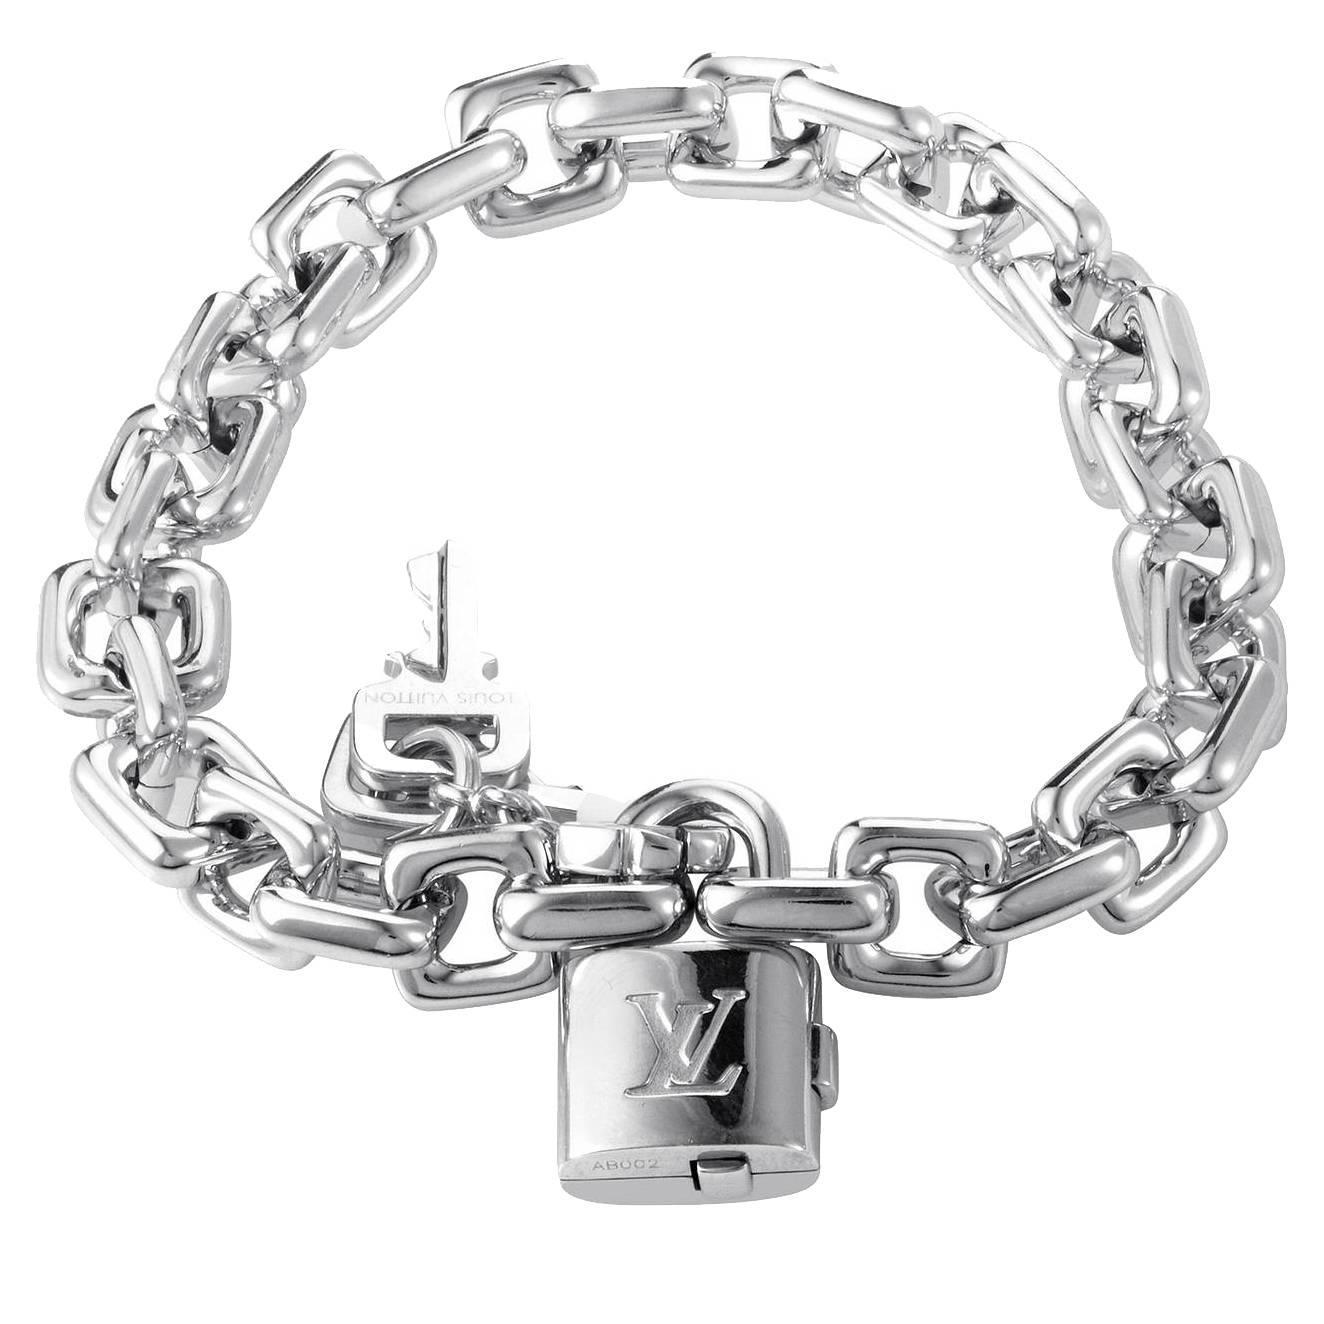 Louis Vuitton Gold Lock Link Bracelet For Sale at 1stdibs